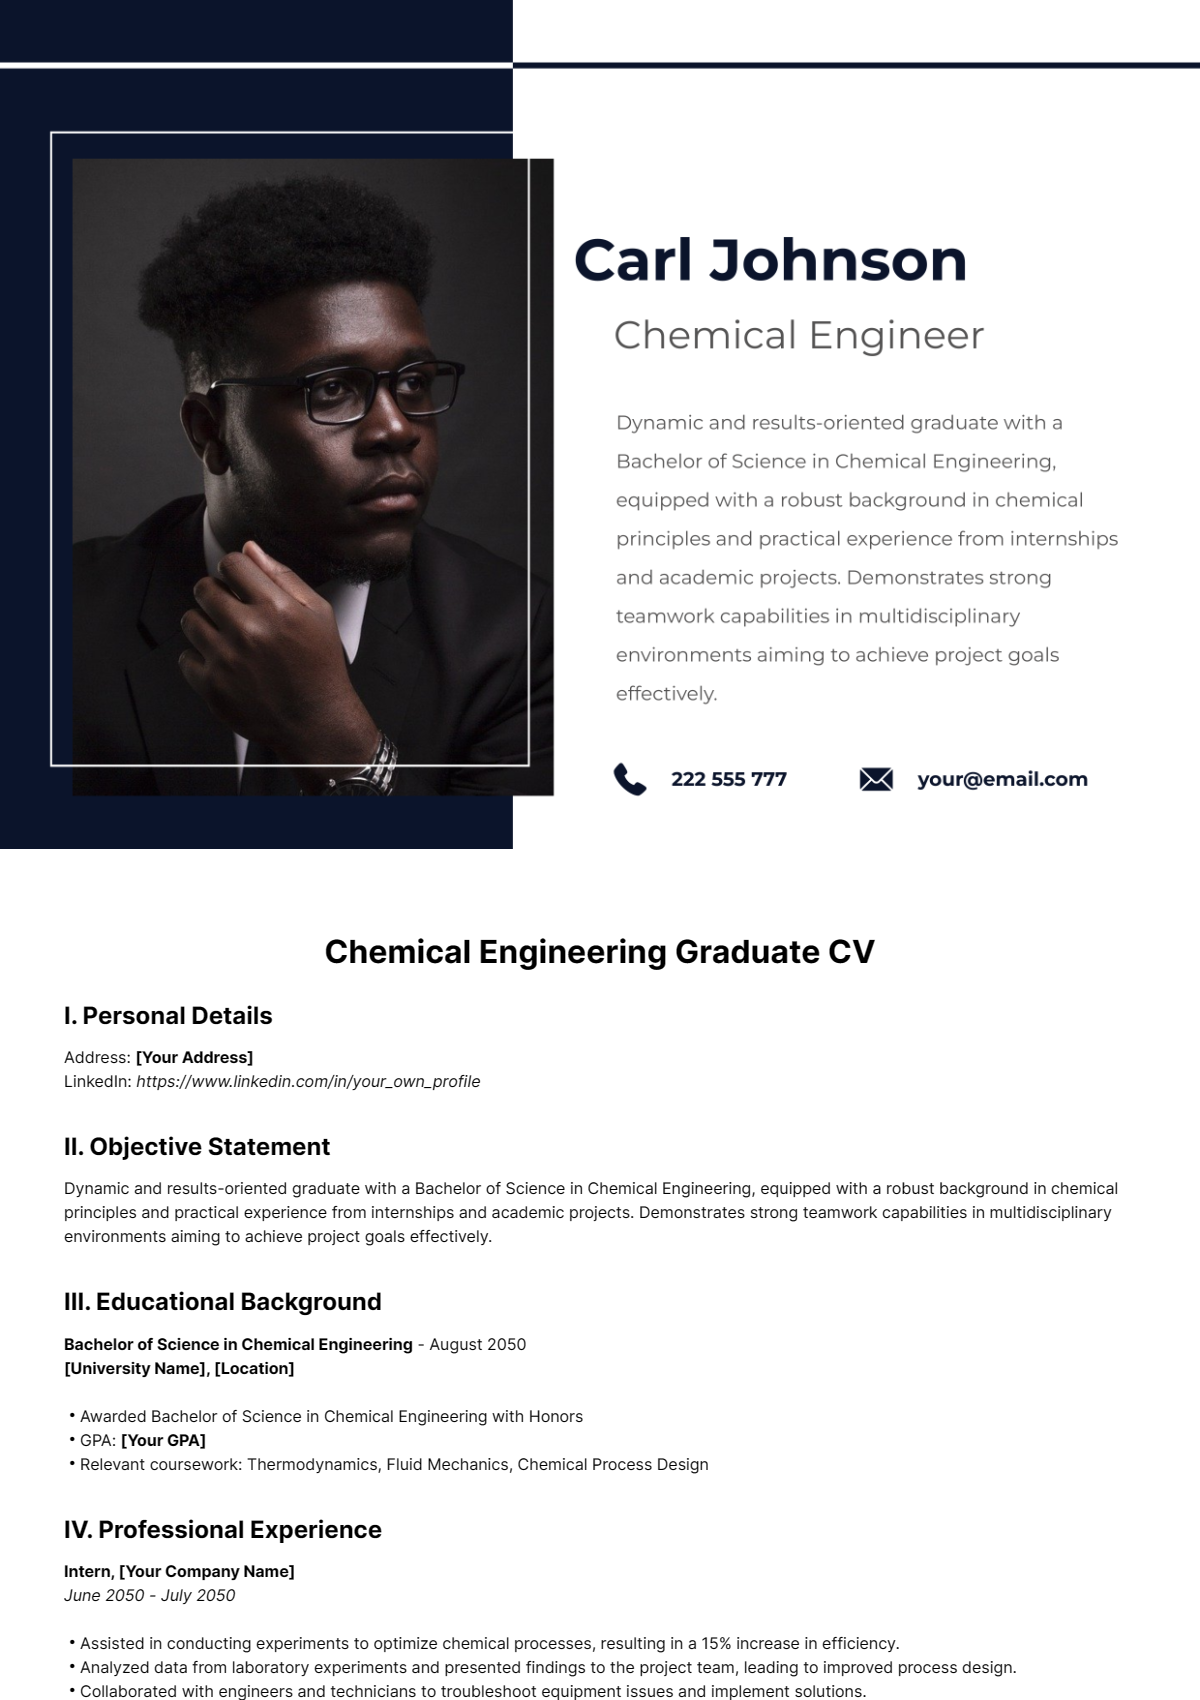 Chemical Engineering Graduate CV Template